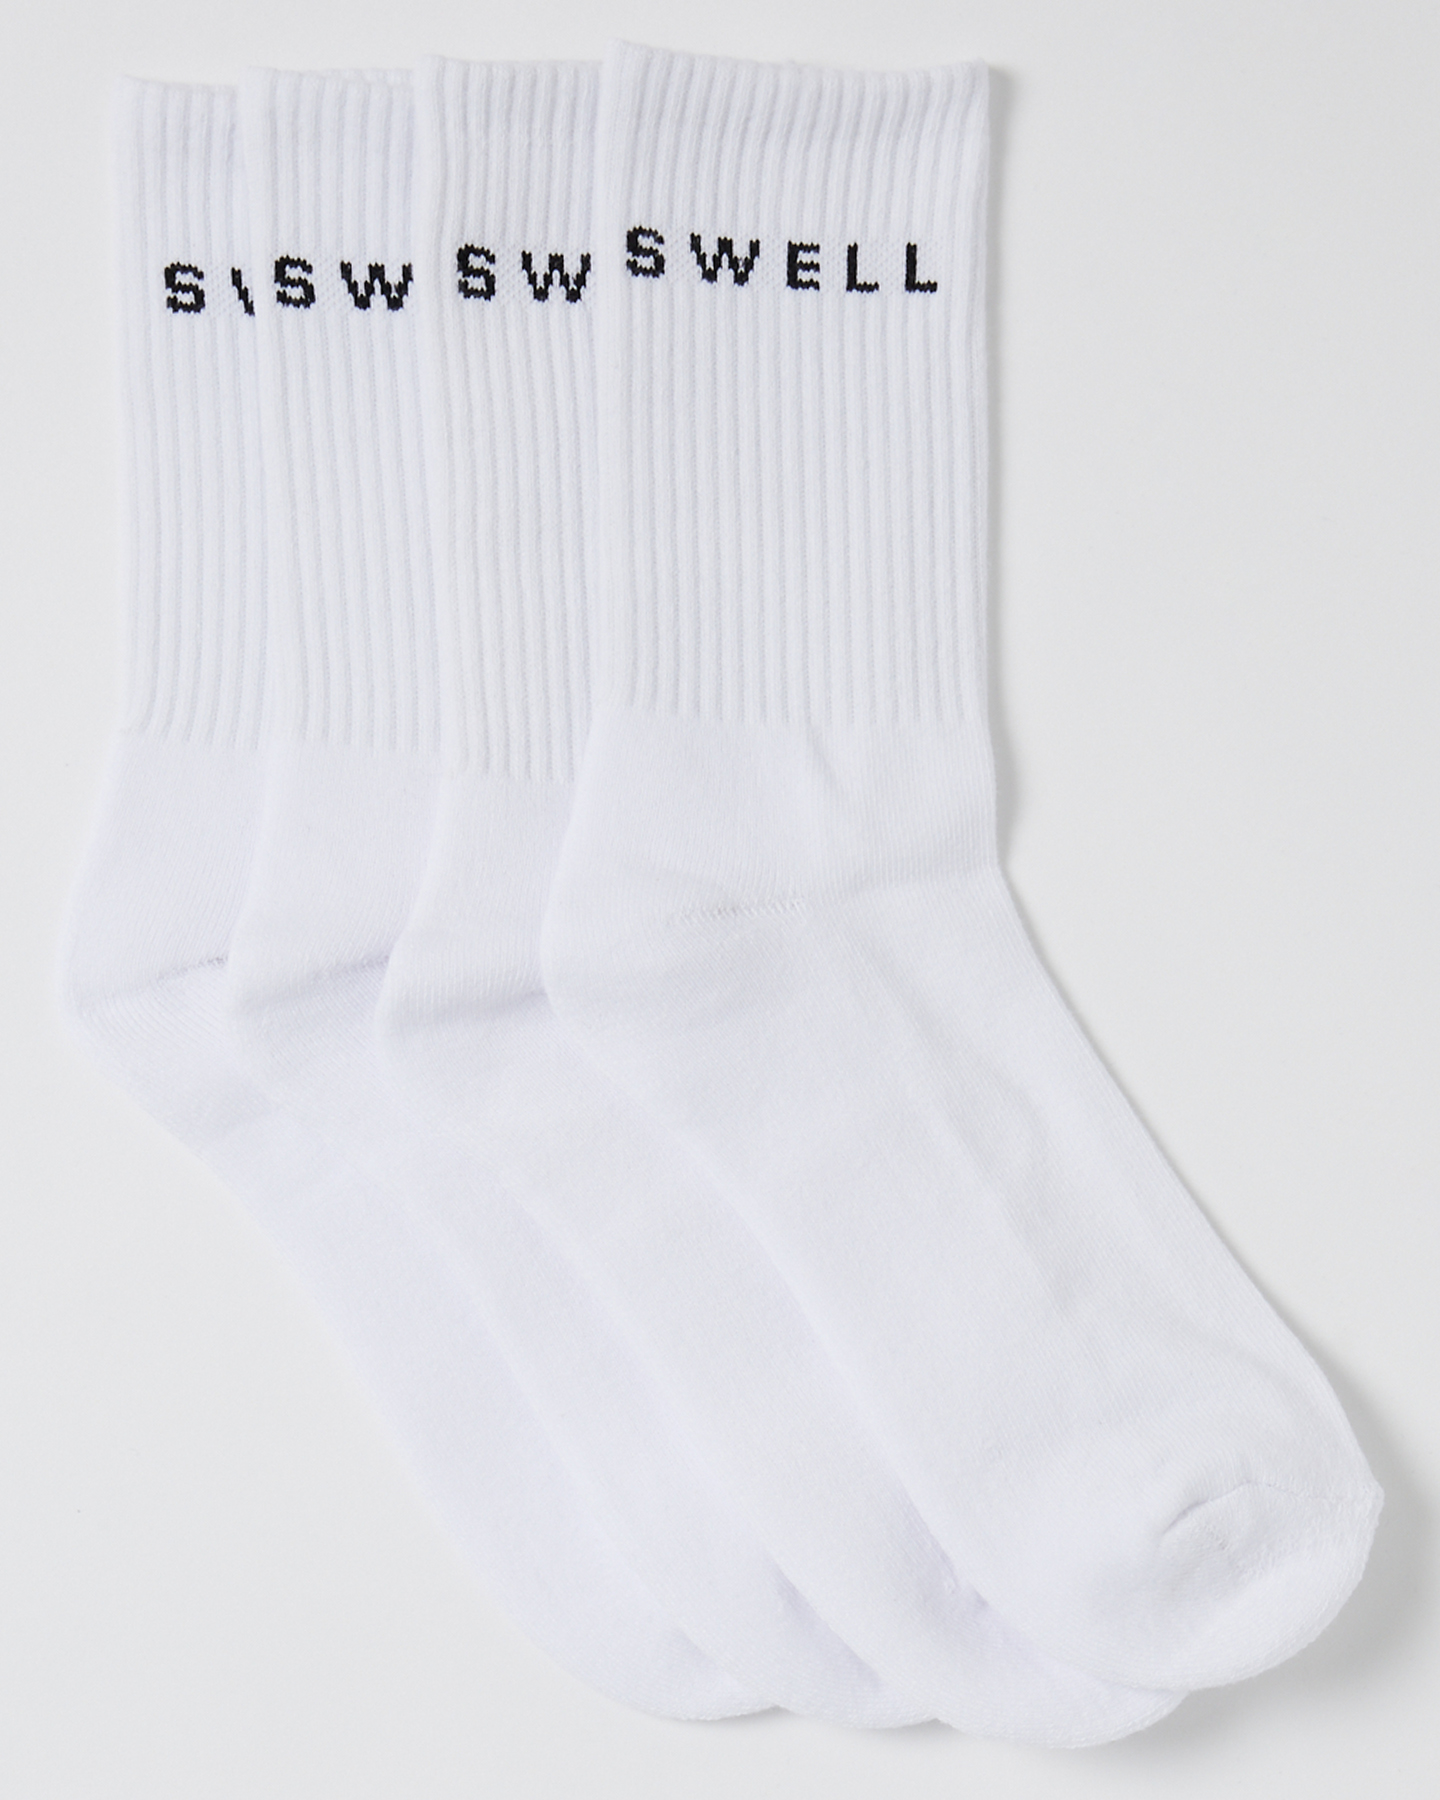 Swell Core Socks White - White | SurfStitch